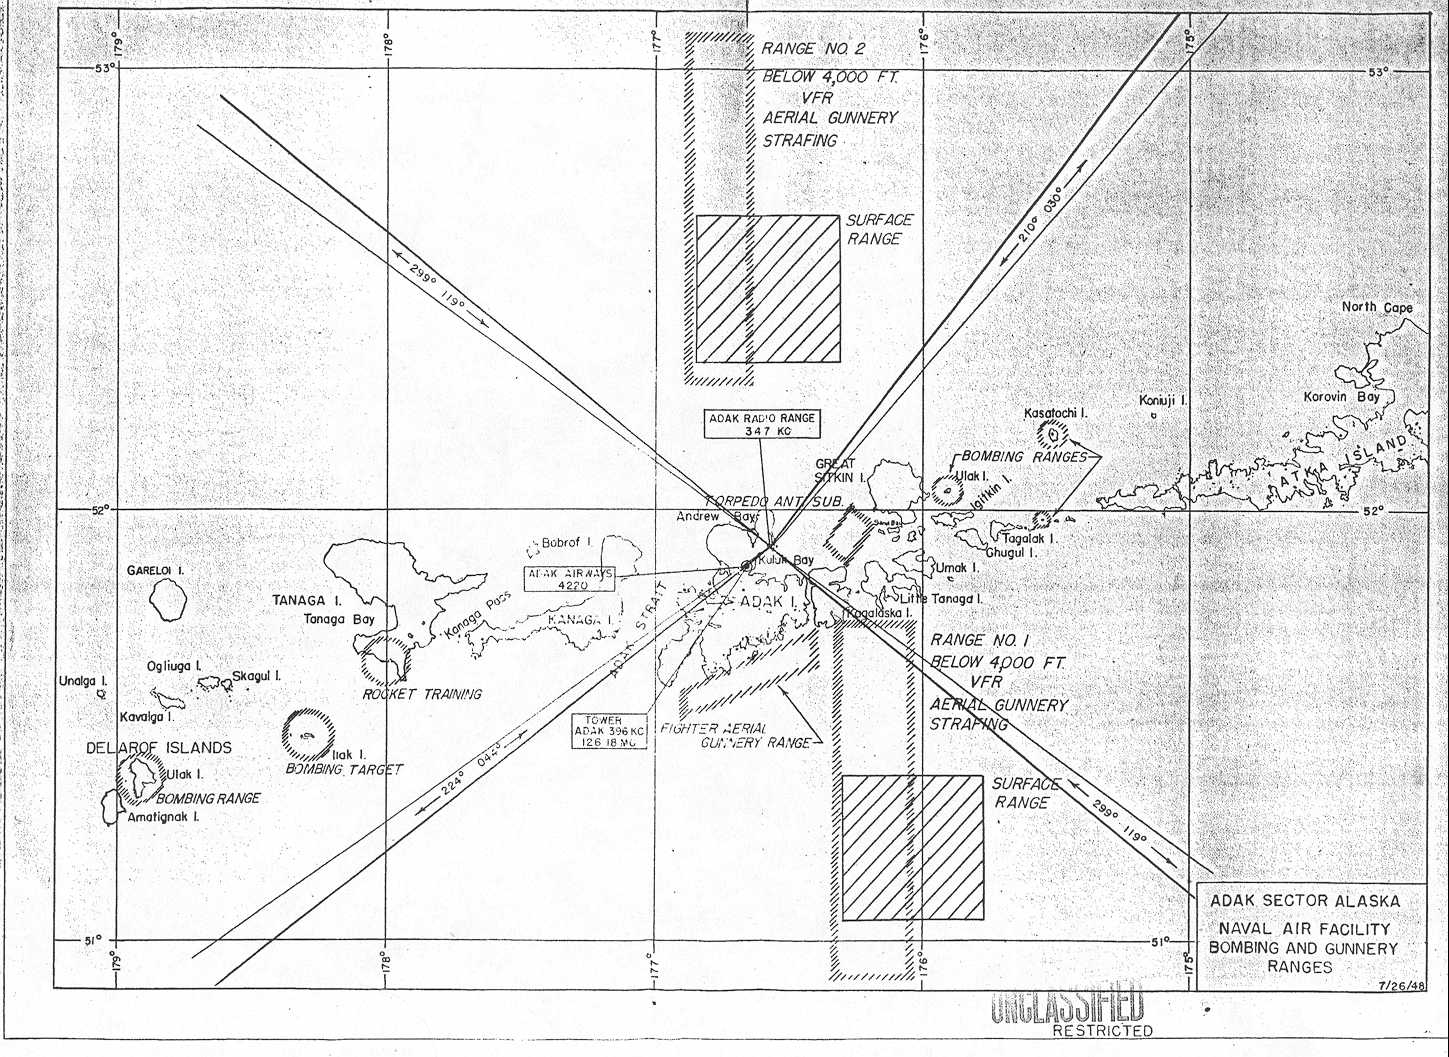 NAF Adak Sector Alaska Bombing and Gunnery Ranges, 26 July 1948